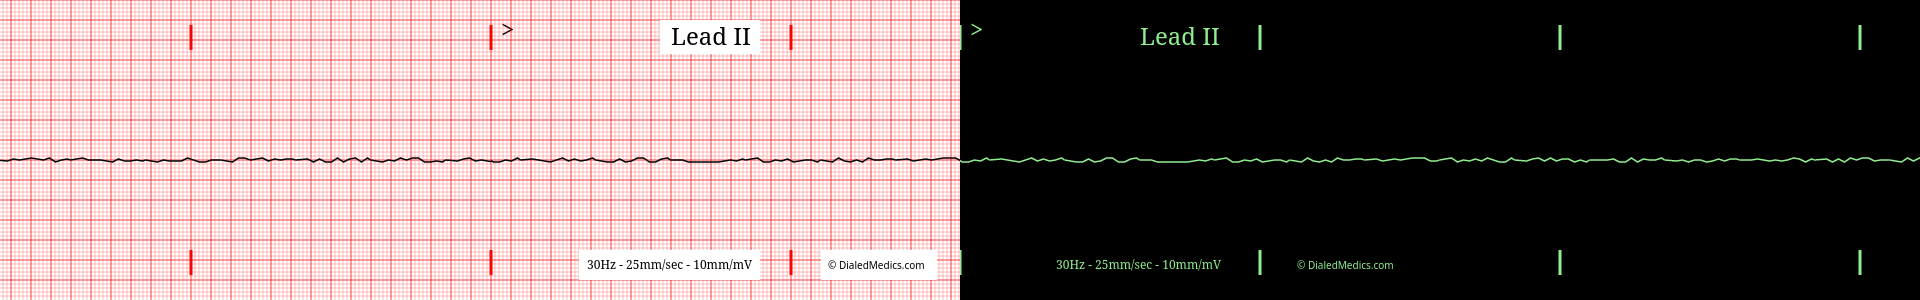 EKG graph paper and cardiac monitor screen display examples.